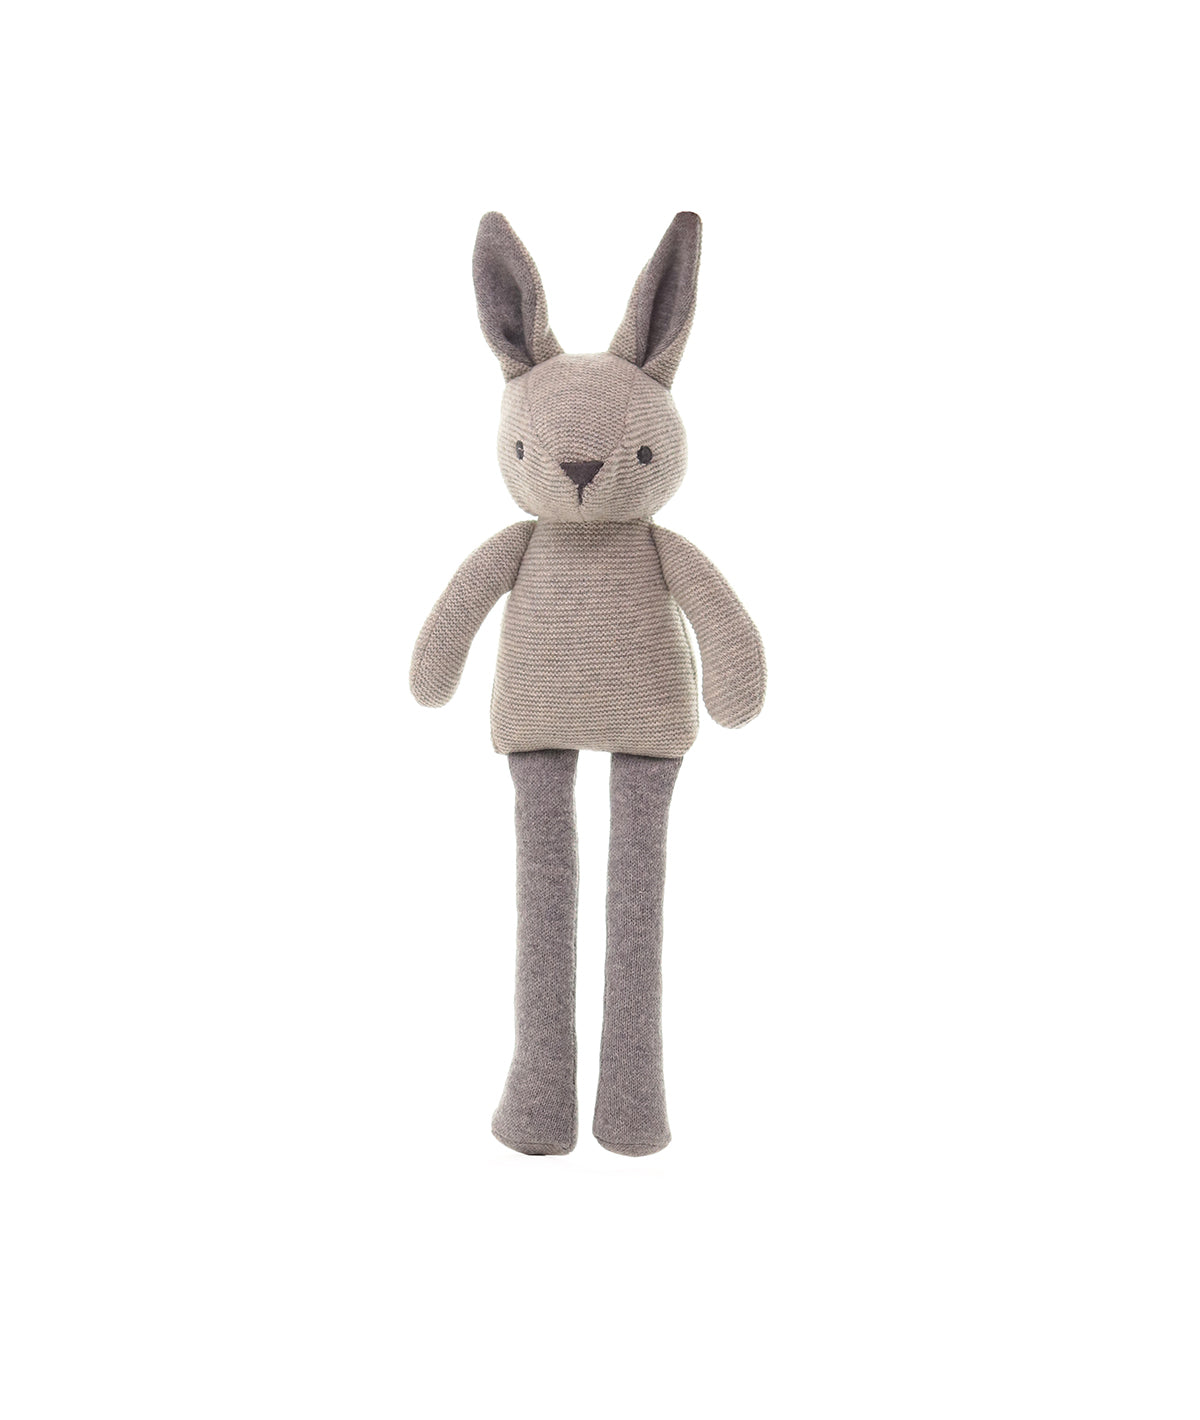 Mr. Long Legs Cotton Knitted Stuffed Soft Toy (Vanilla Grey Melange & Medium Grey Melange)